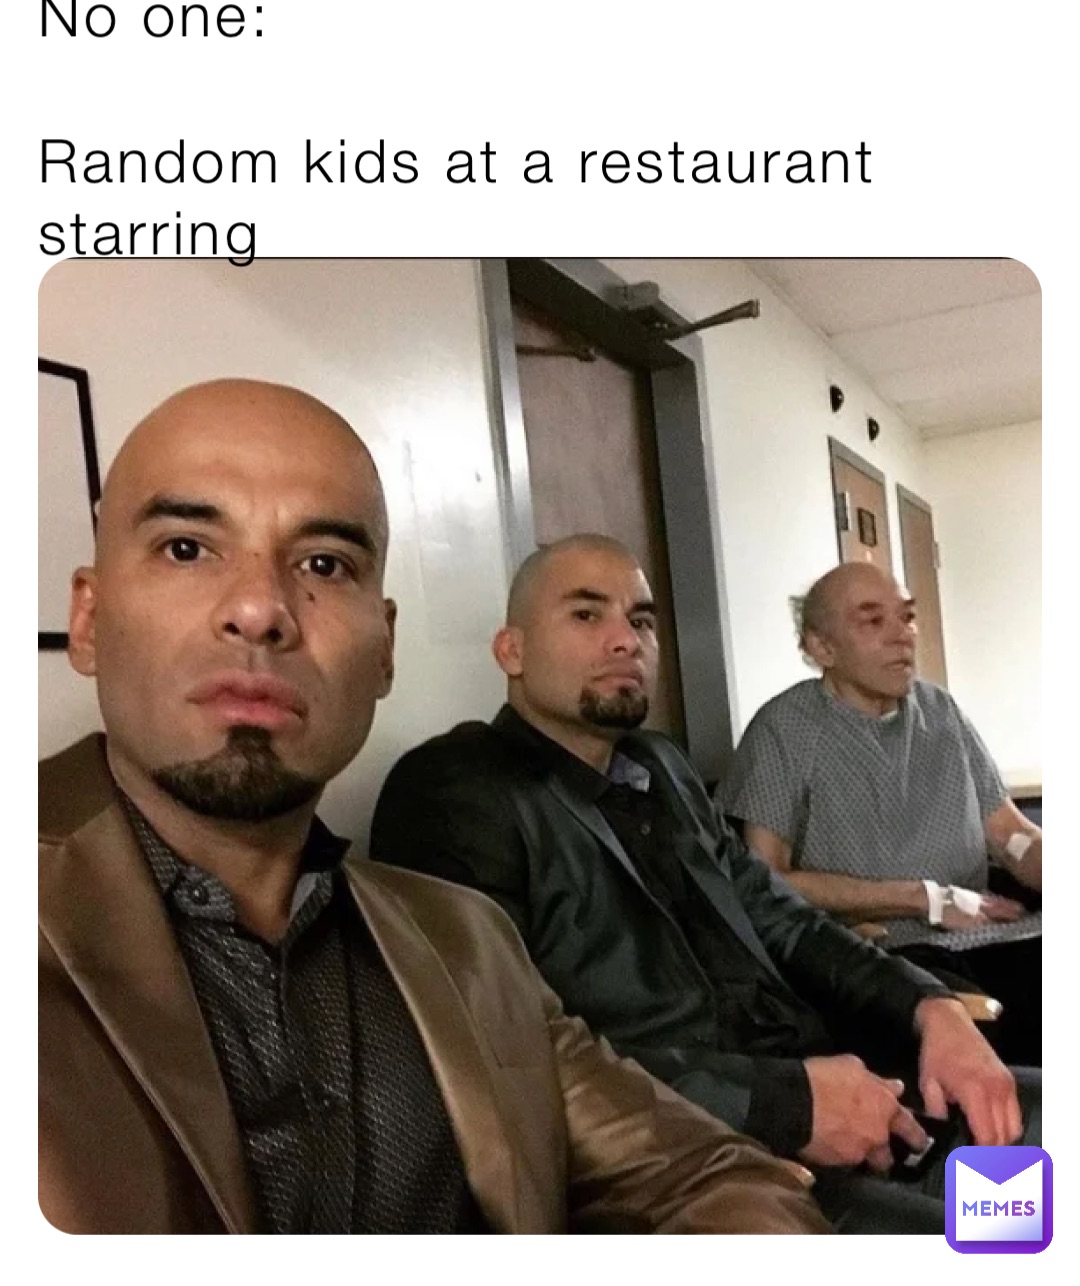 No one:

Random kids at a restaurant starring